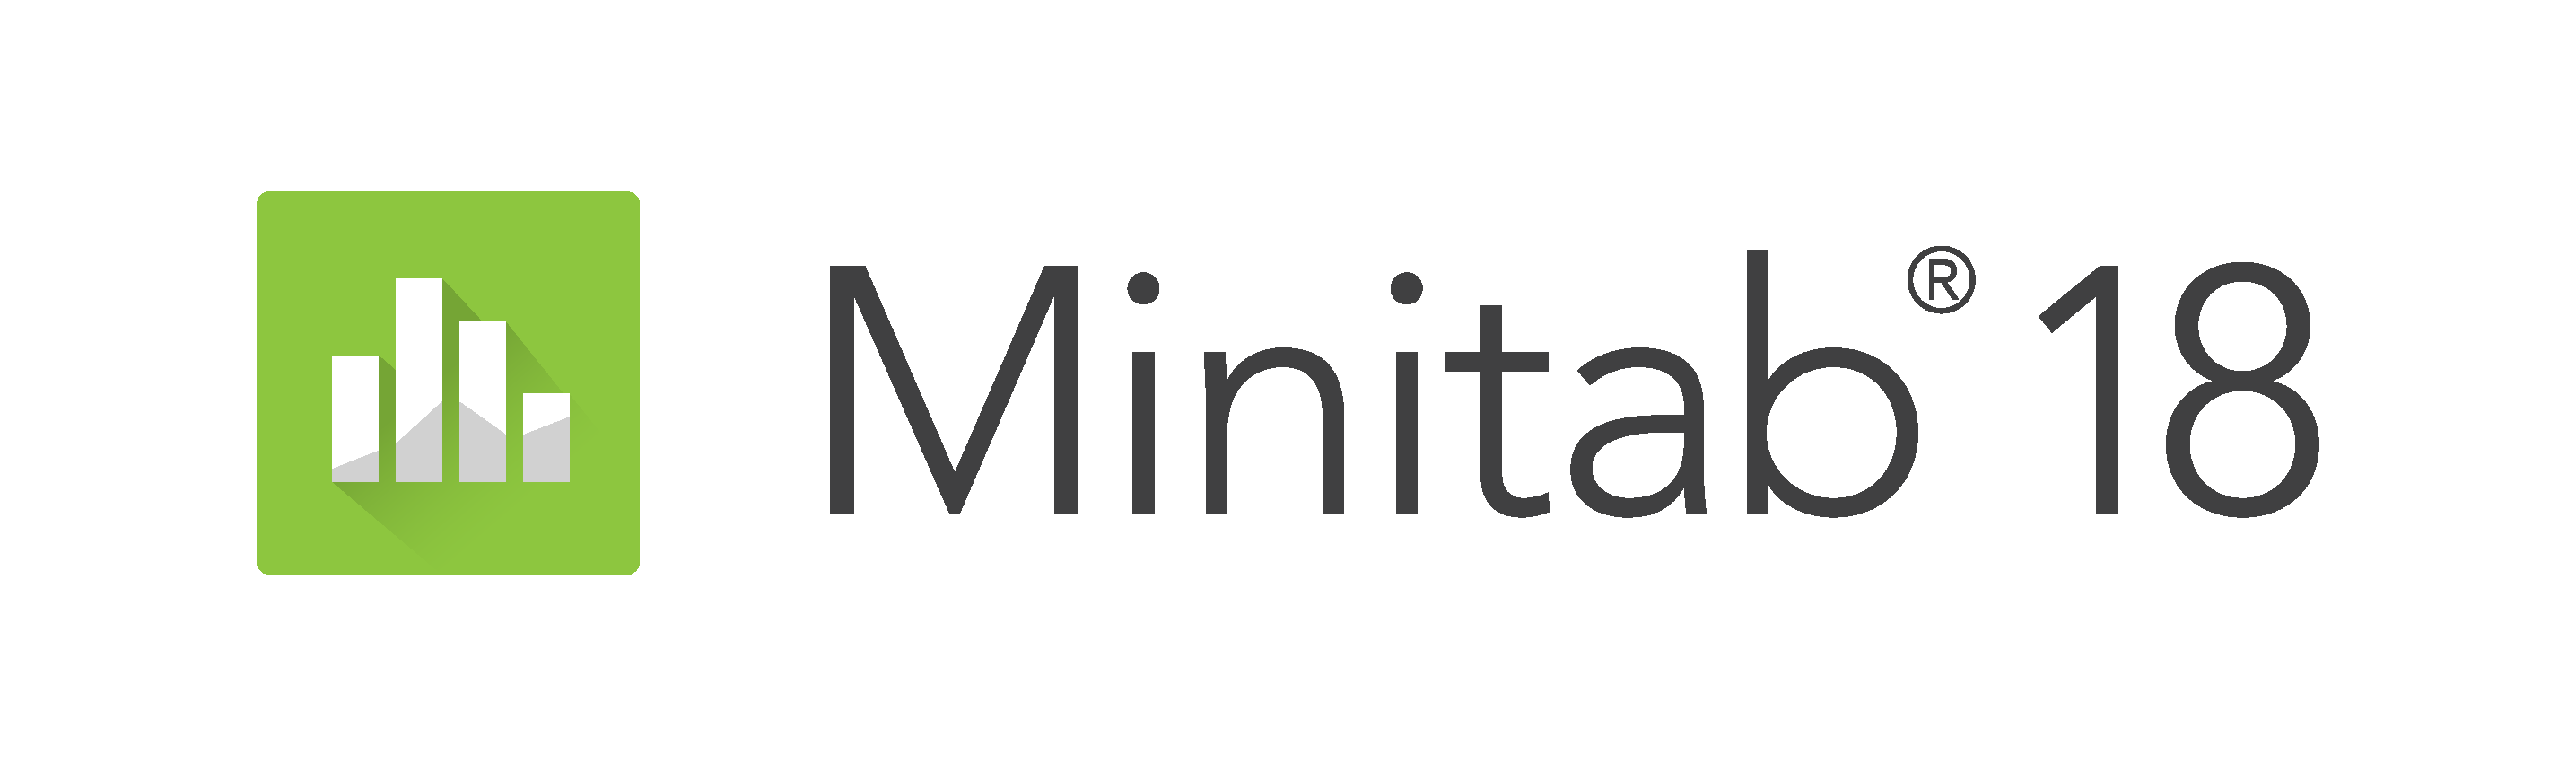 minitab online